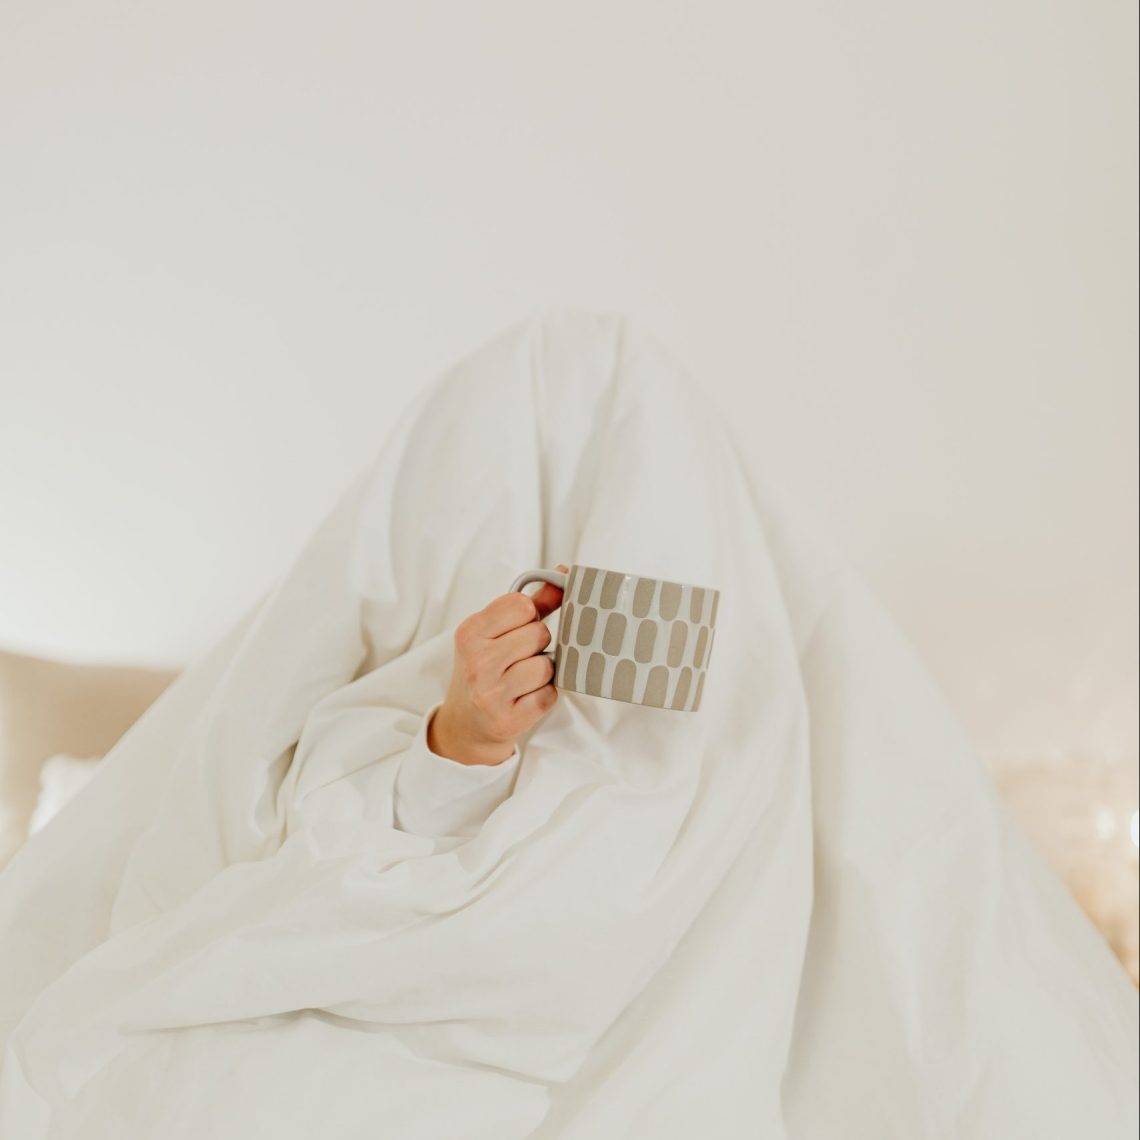 Photo by Karolina Grabowska: https://www.pexels.com/photo/person-hiding-under-a-white-blanket-holding-a-ceramic-mug-6660832/